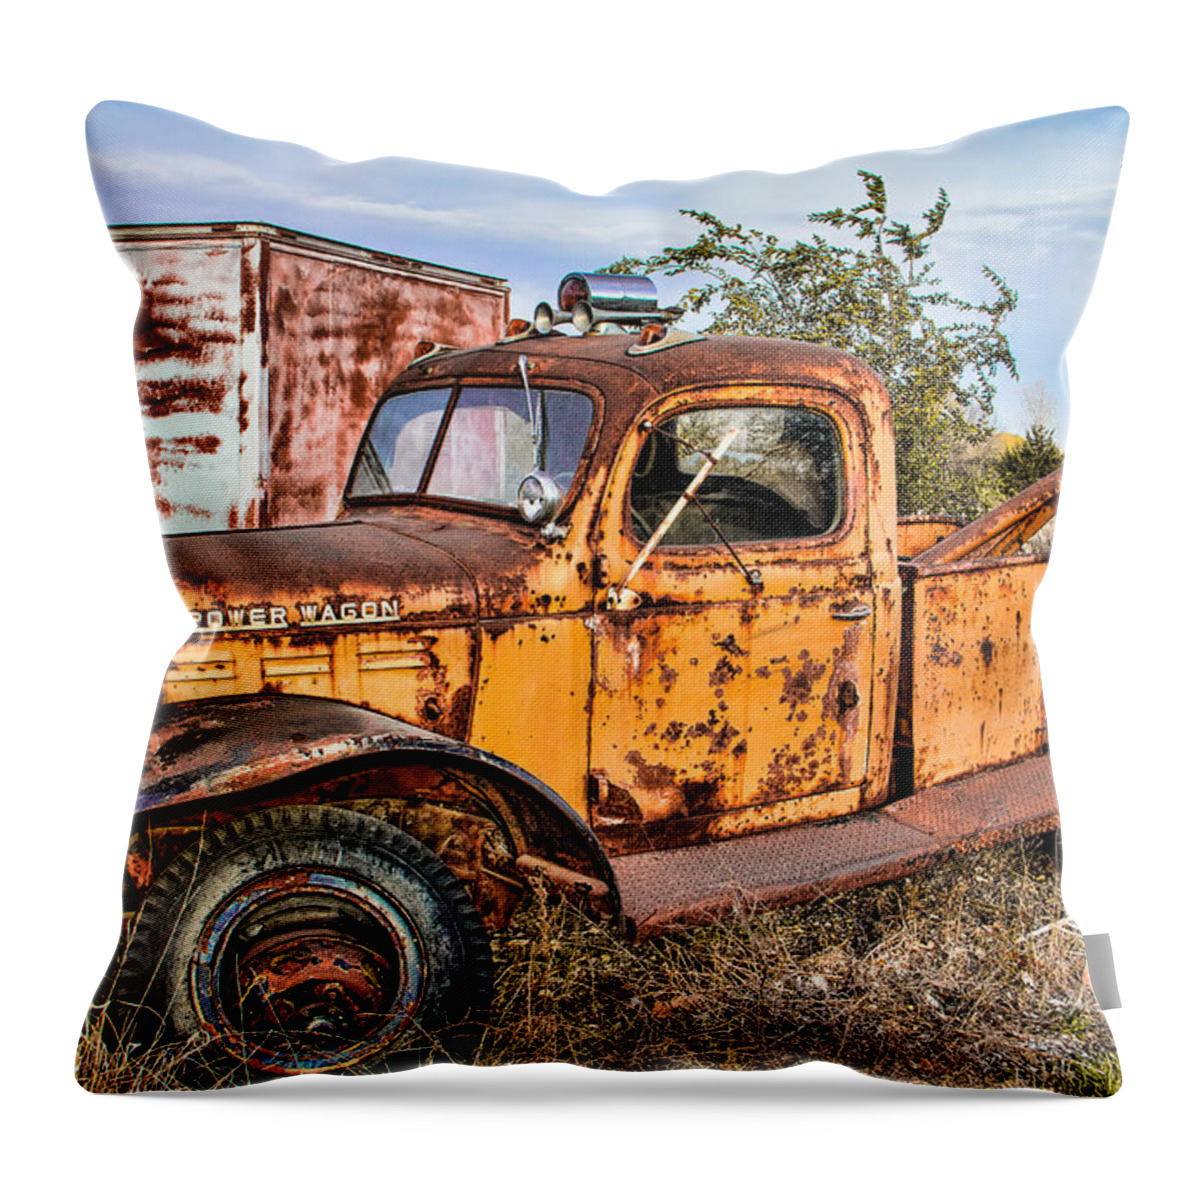 Steven Bateson Throw Pillow featuring the photograph Dodge Power Wagon Wrecker by Steven Bateson